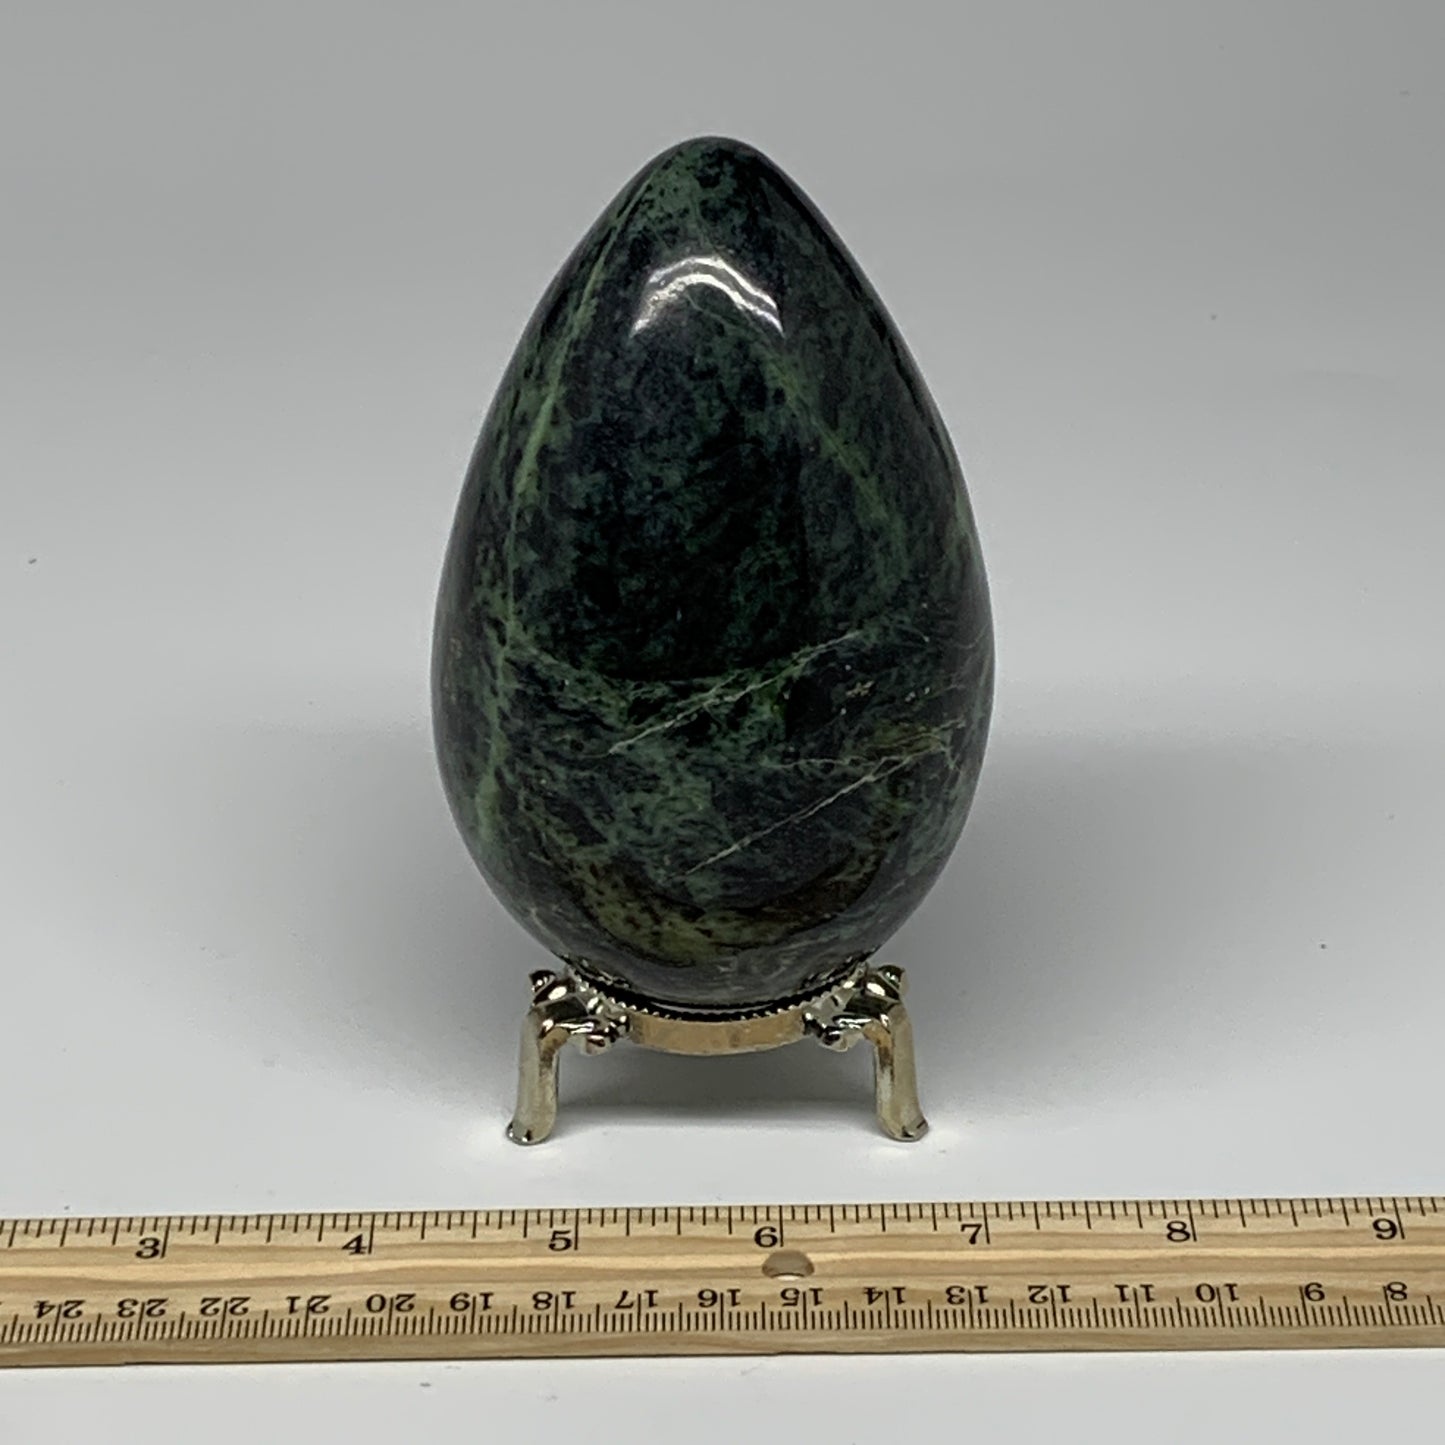 733g, 4.5"x2.8" Natural Green Nephrite Jade Egg Gemstone, @Pakistan, B25365